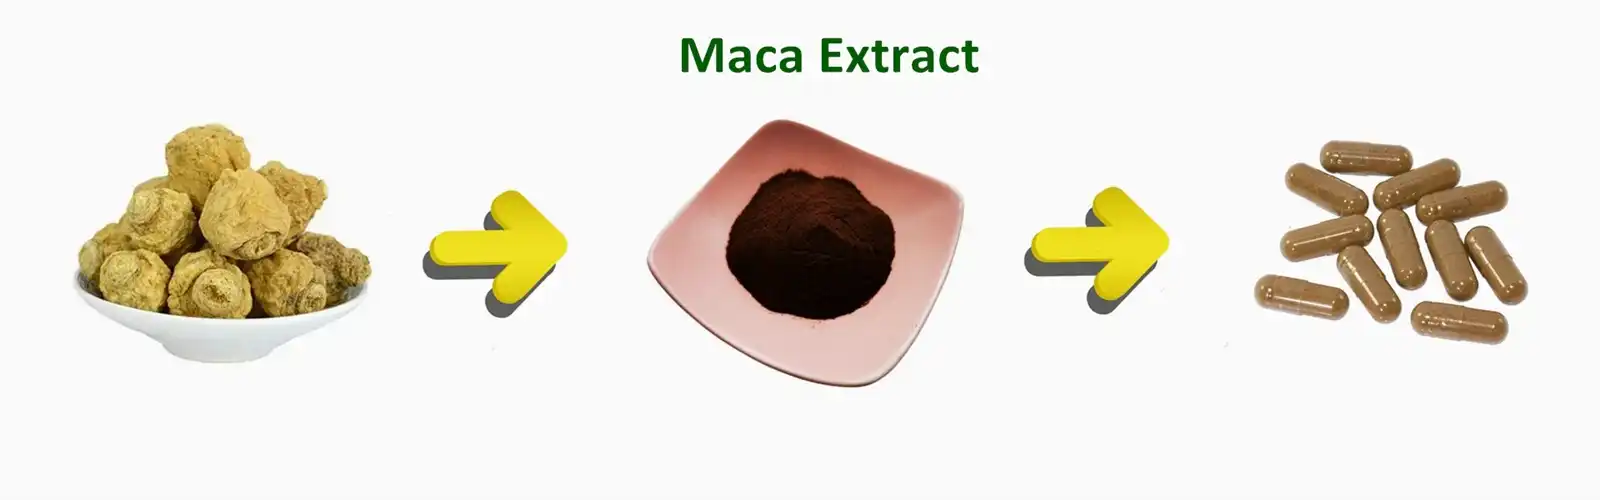 maca extract powder